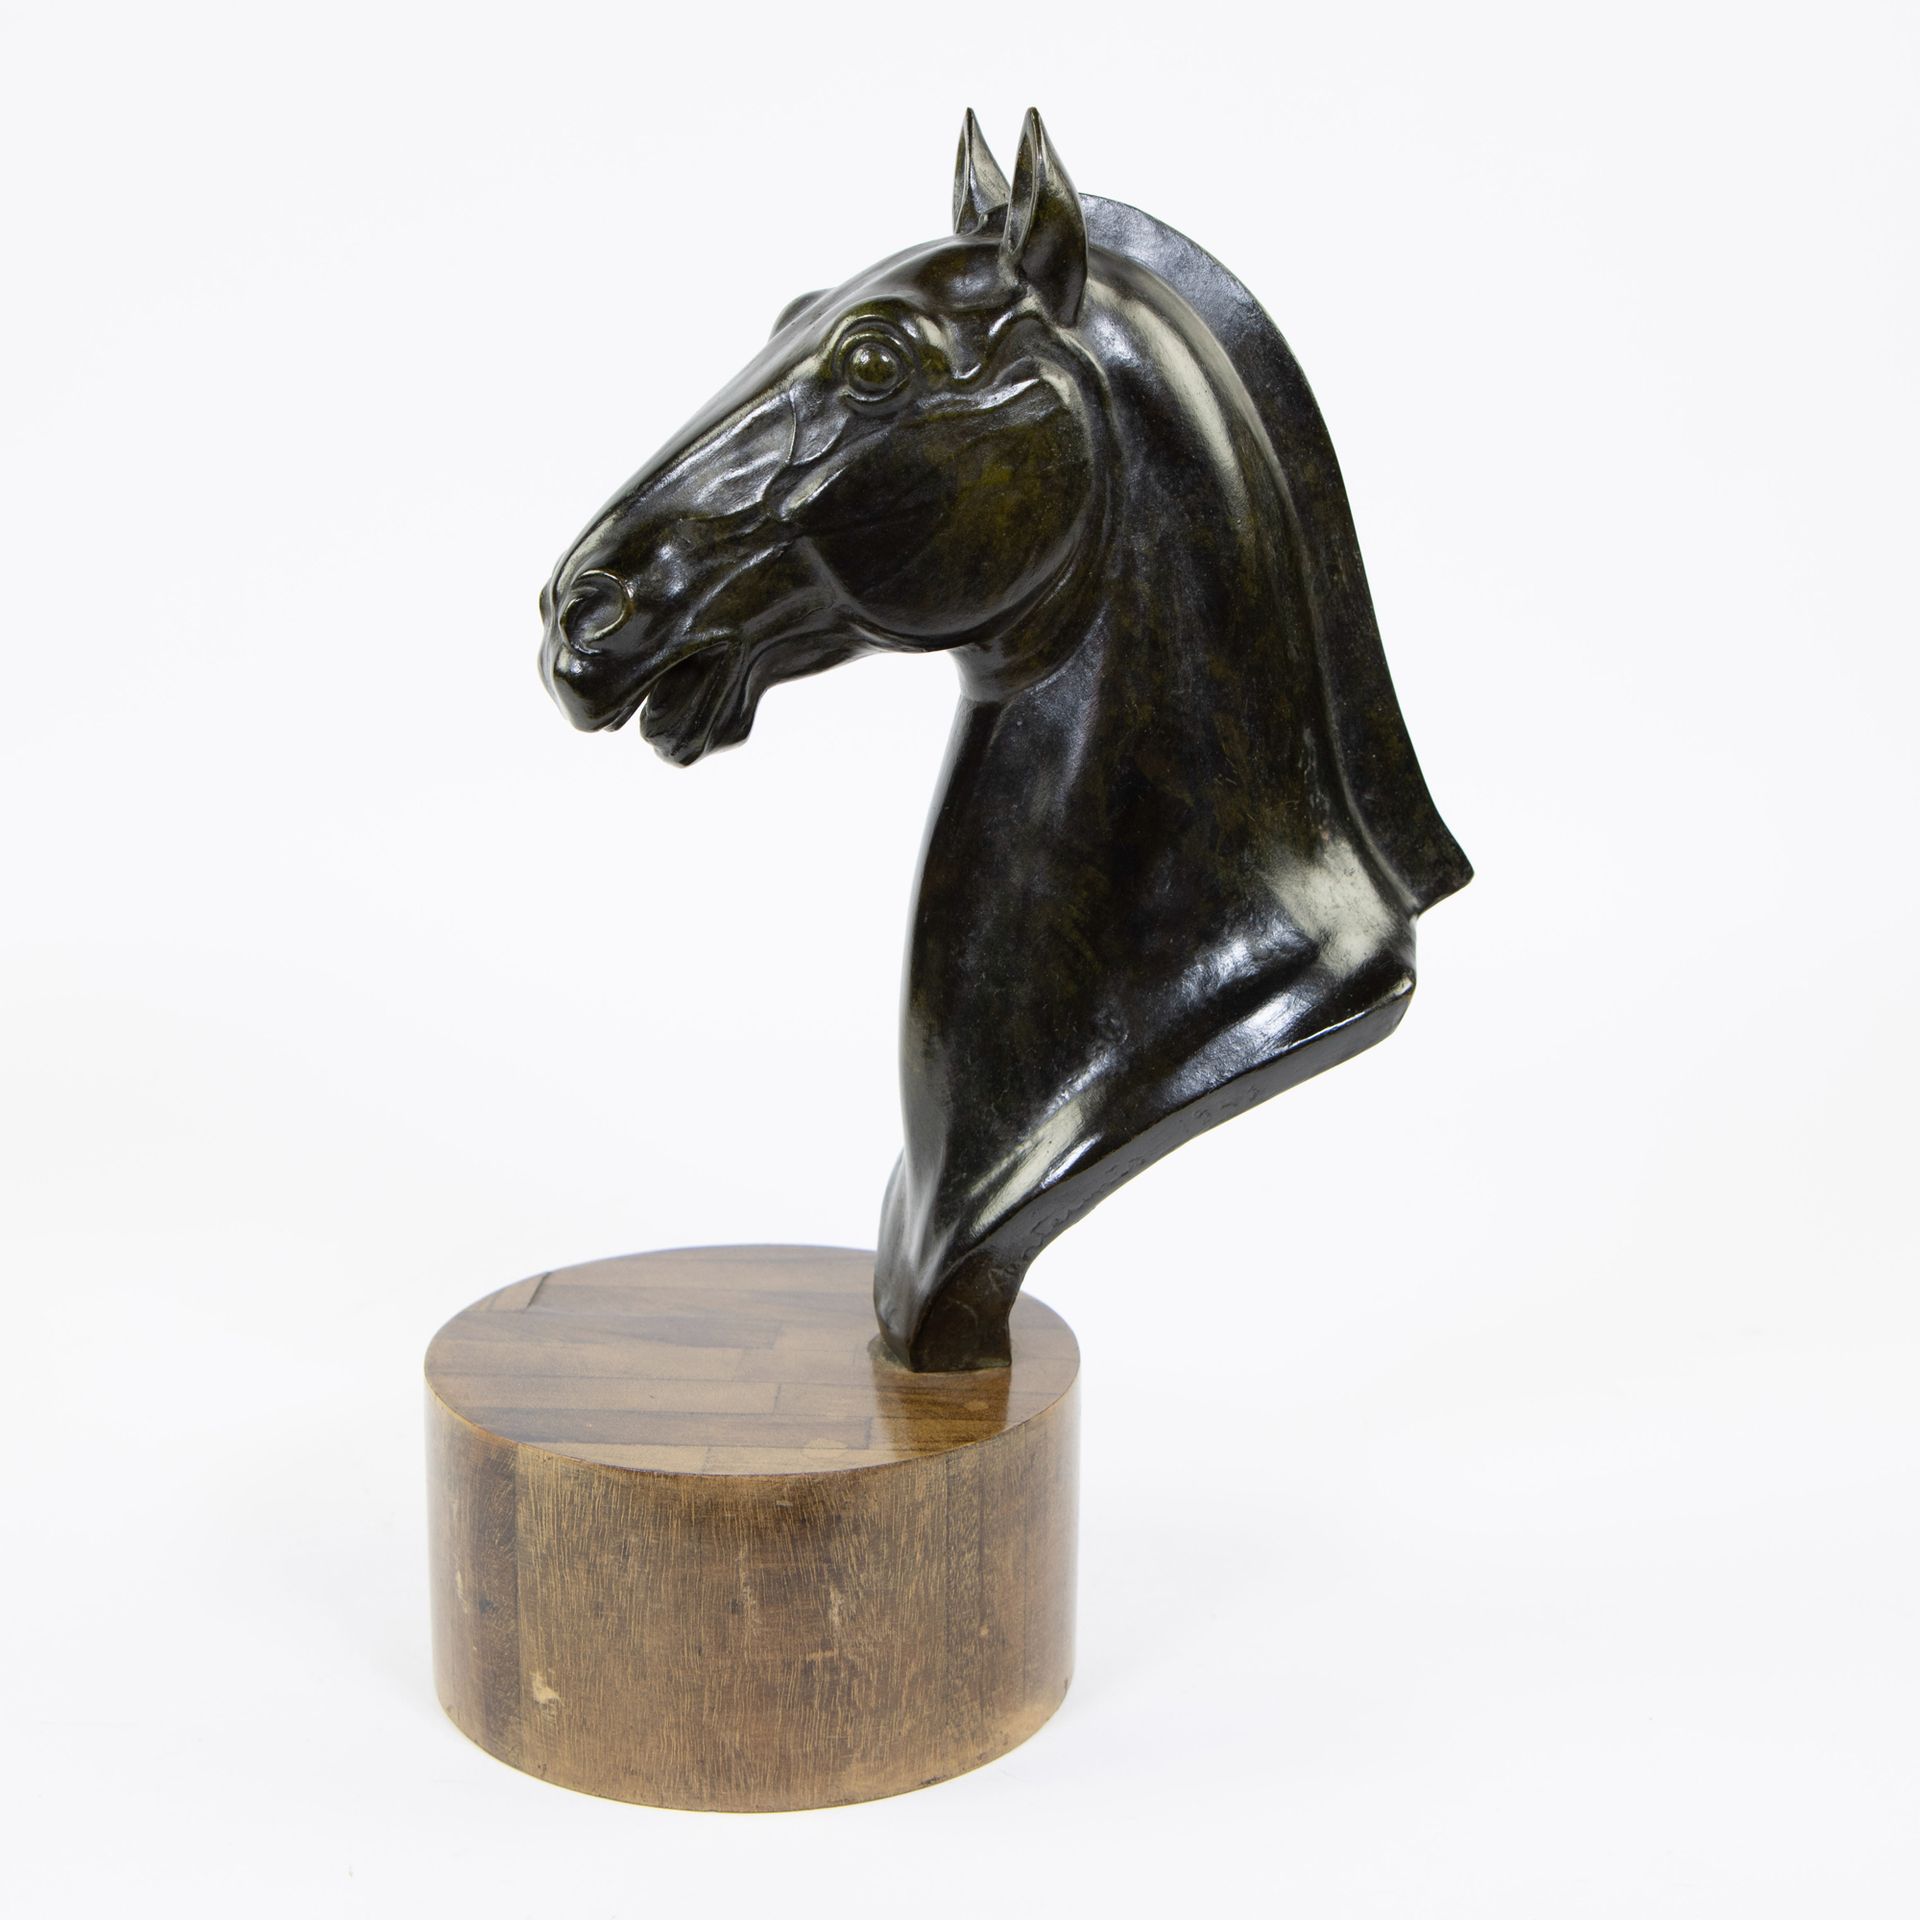 Jan ANTEUNIS (1896-1973) 扬-安特纽斯(1896-1973)
马头的青铜雕塑，签名和日期是1943年。

Bronzen sculptu&hellip;